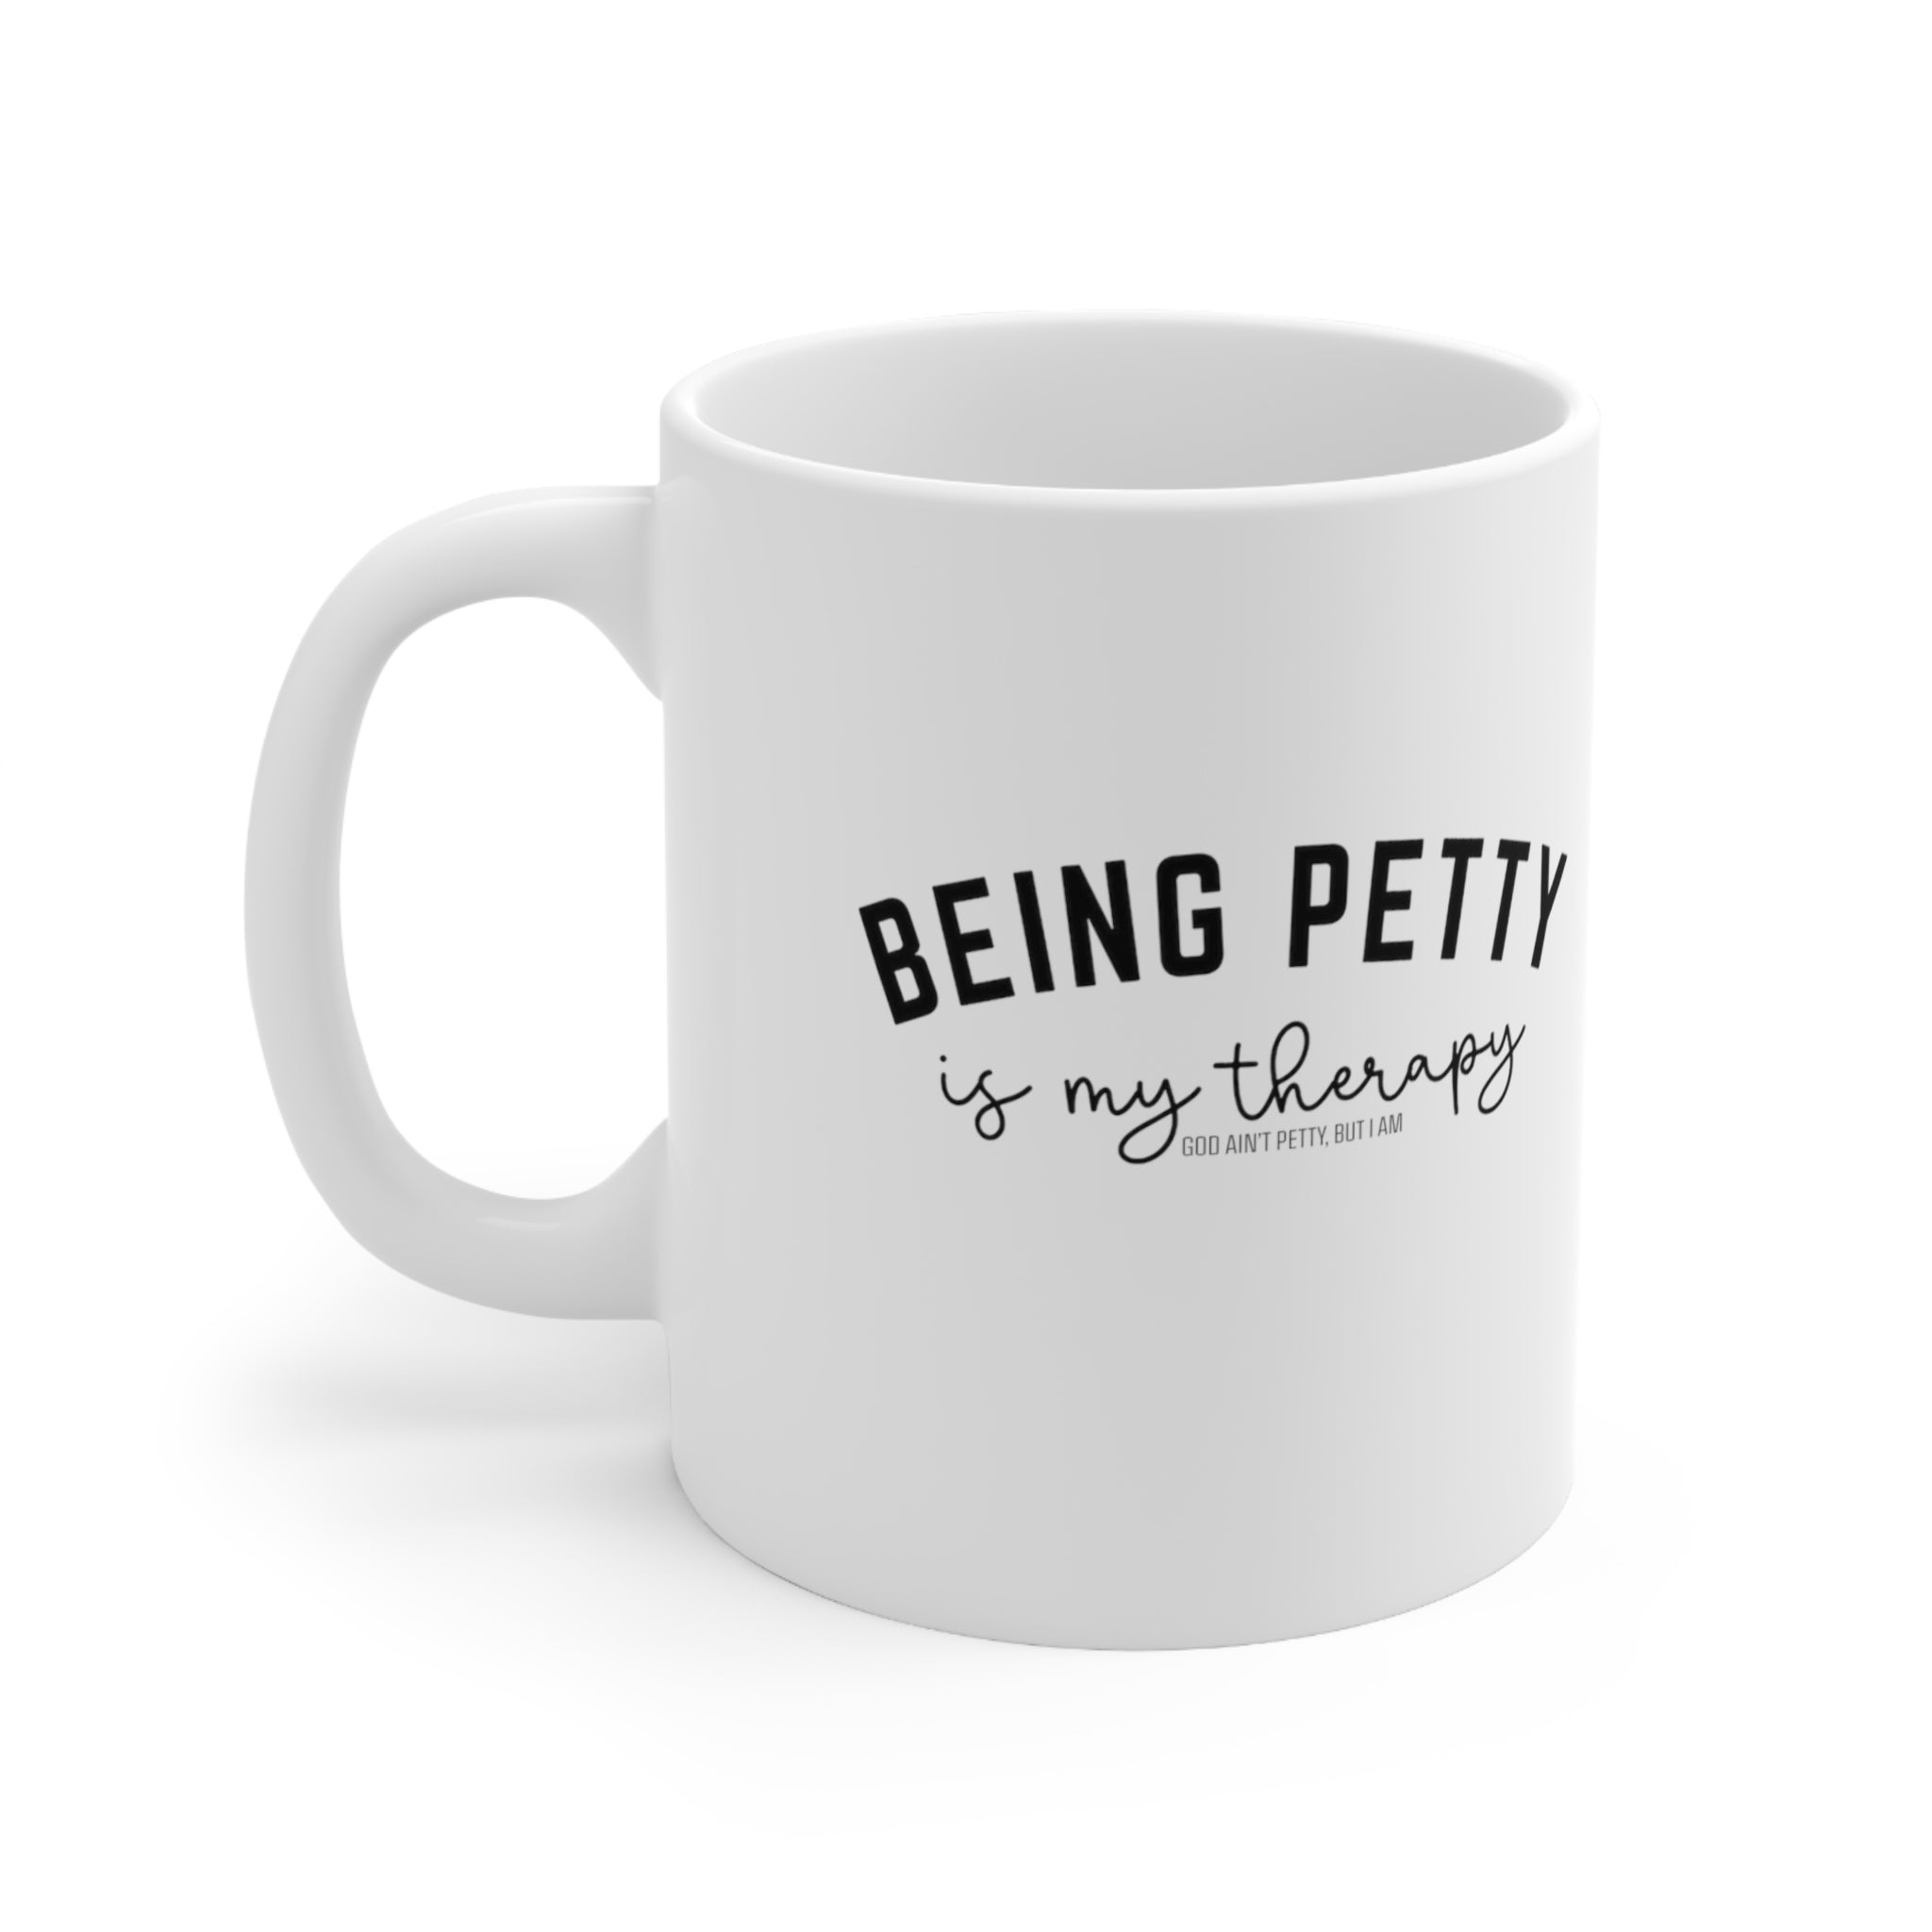 Being Petty is my Therapy Mug 11oz (White & Black )-Mug-The Original God Ain't Petty But I Am